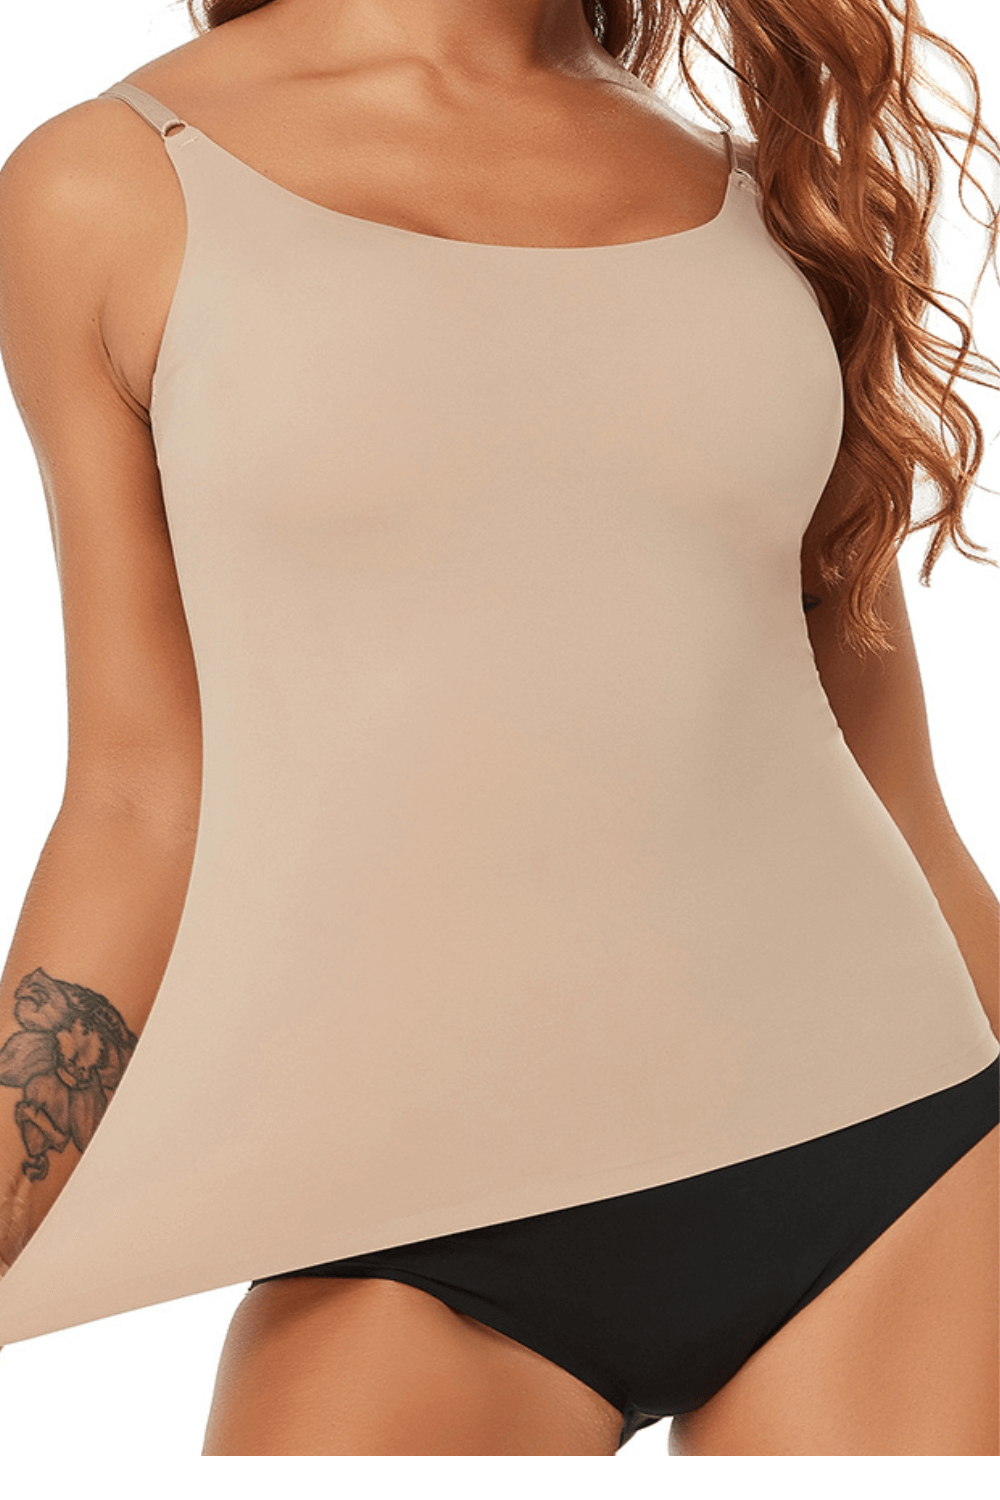 Blusa Regata Feminina Modeladora - Slim Fit